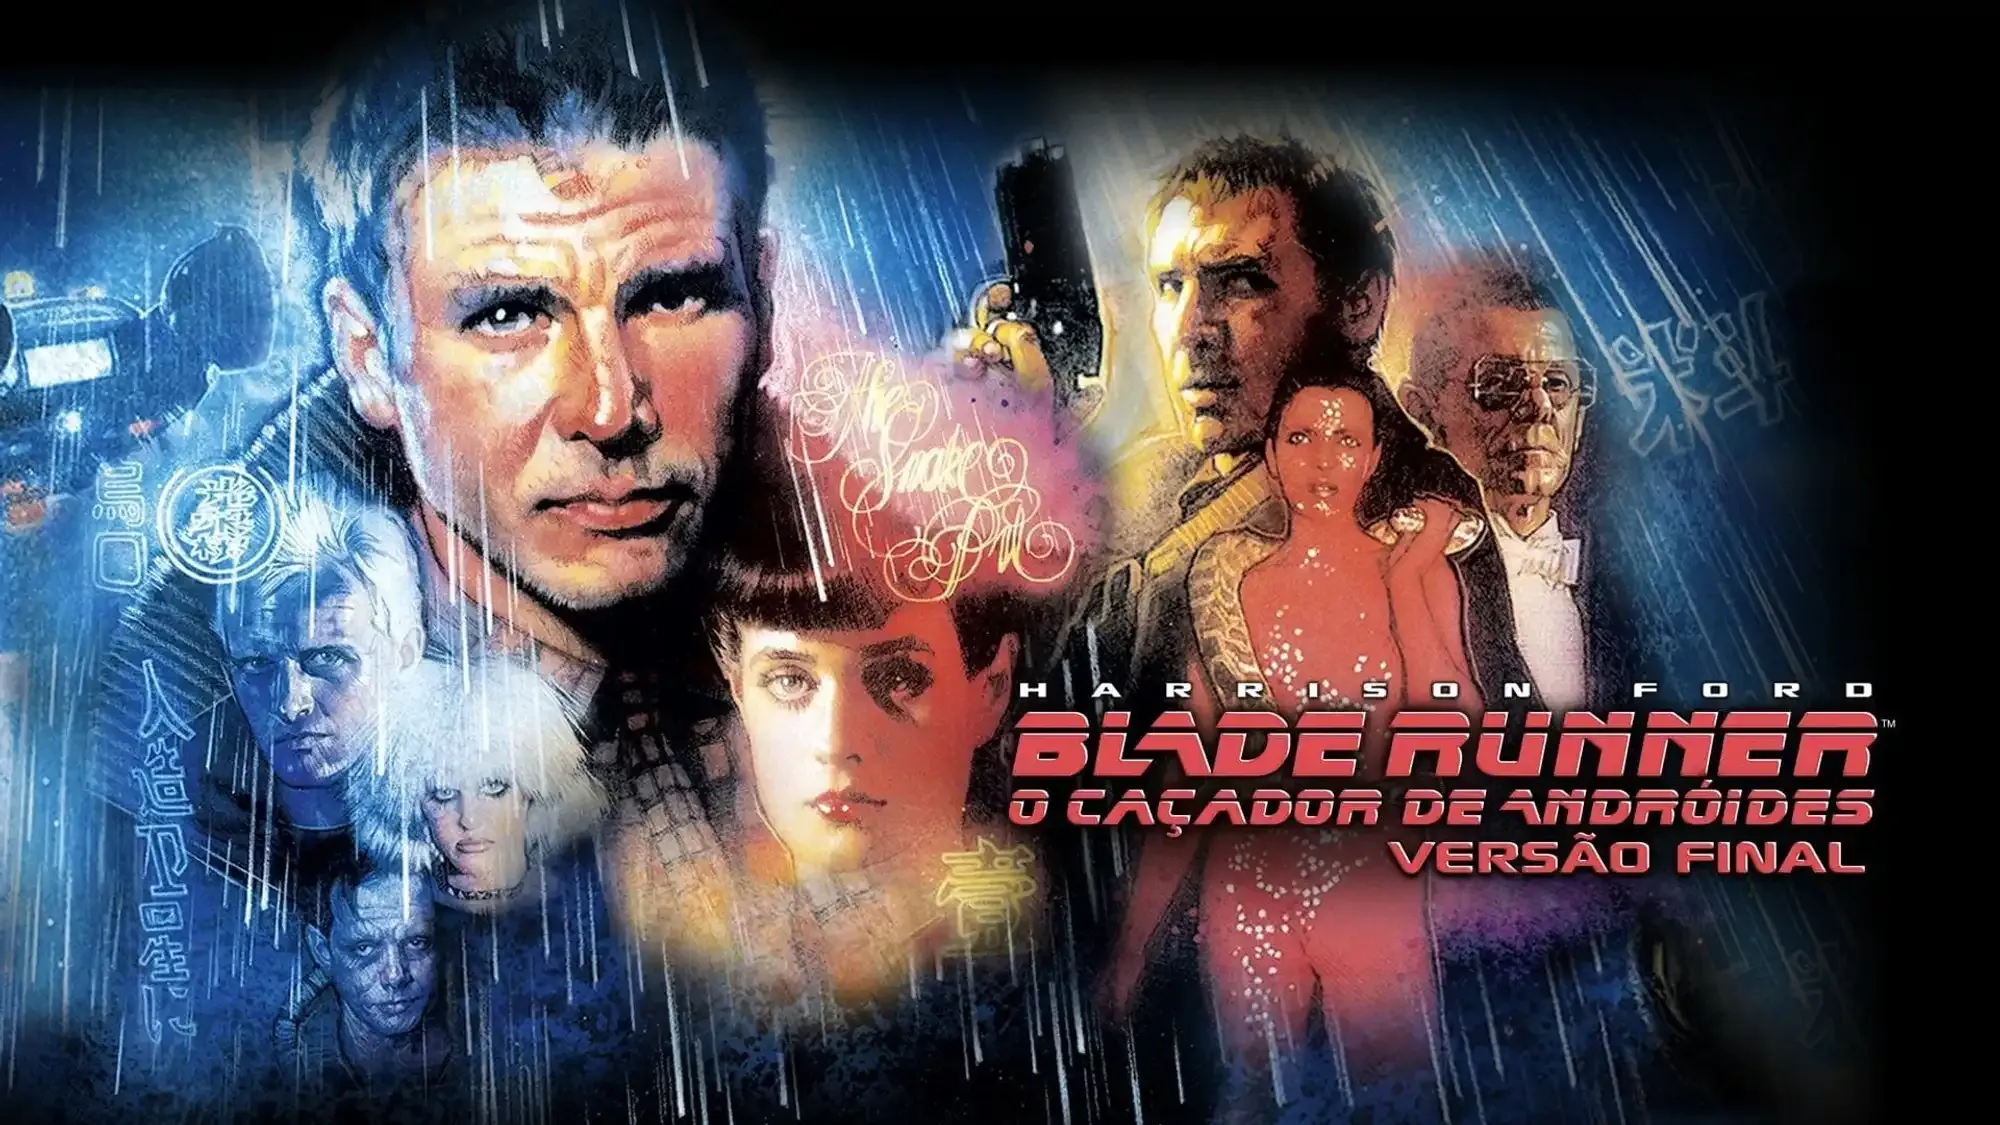 Blade Runner movie review